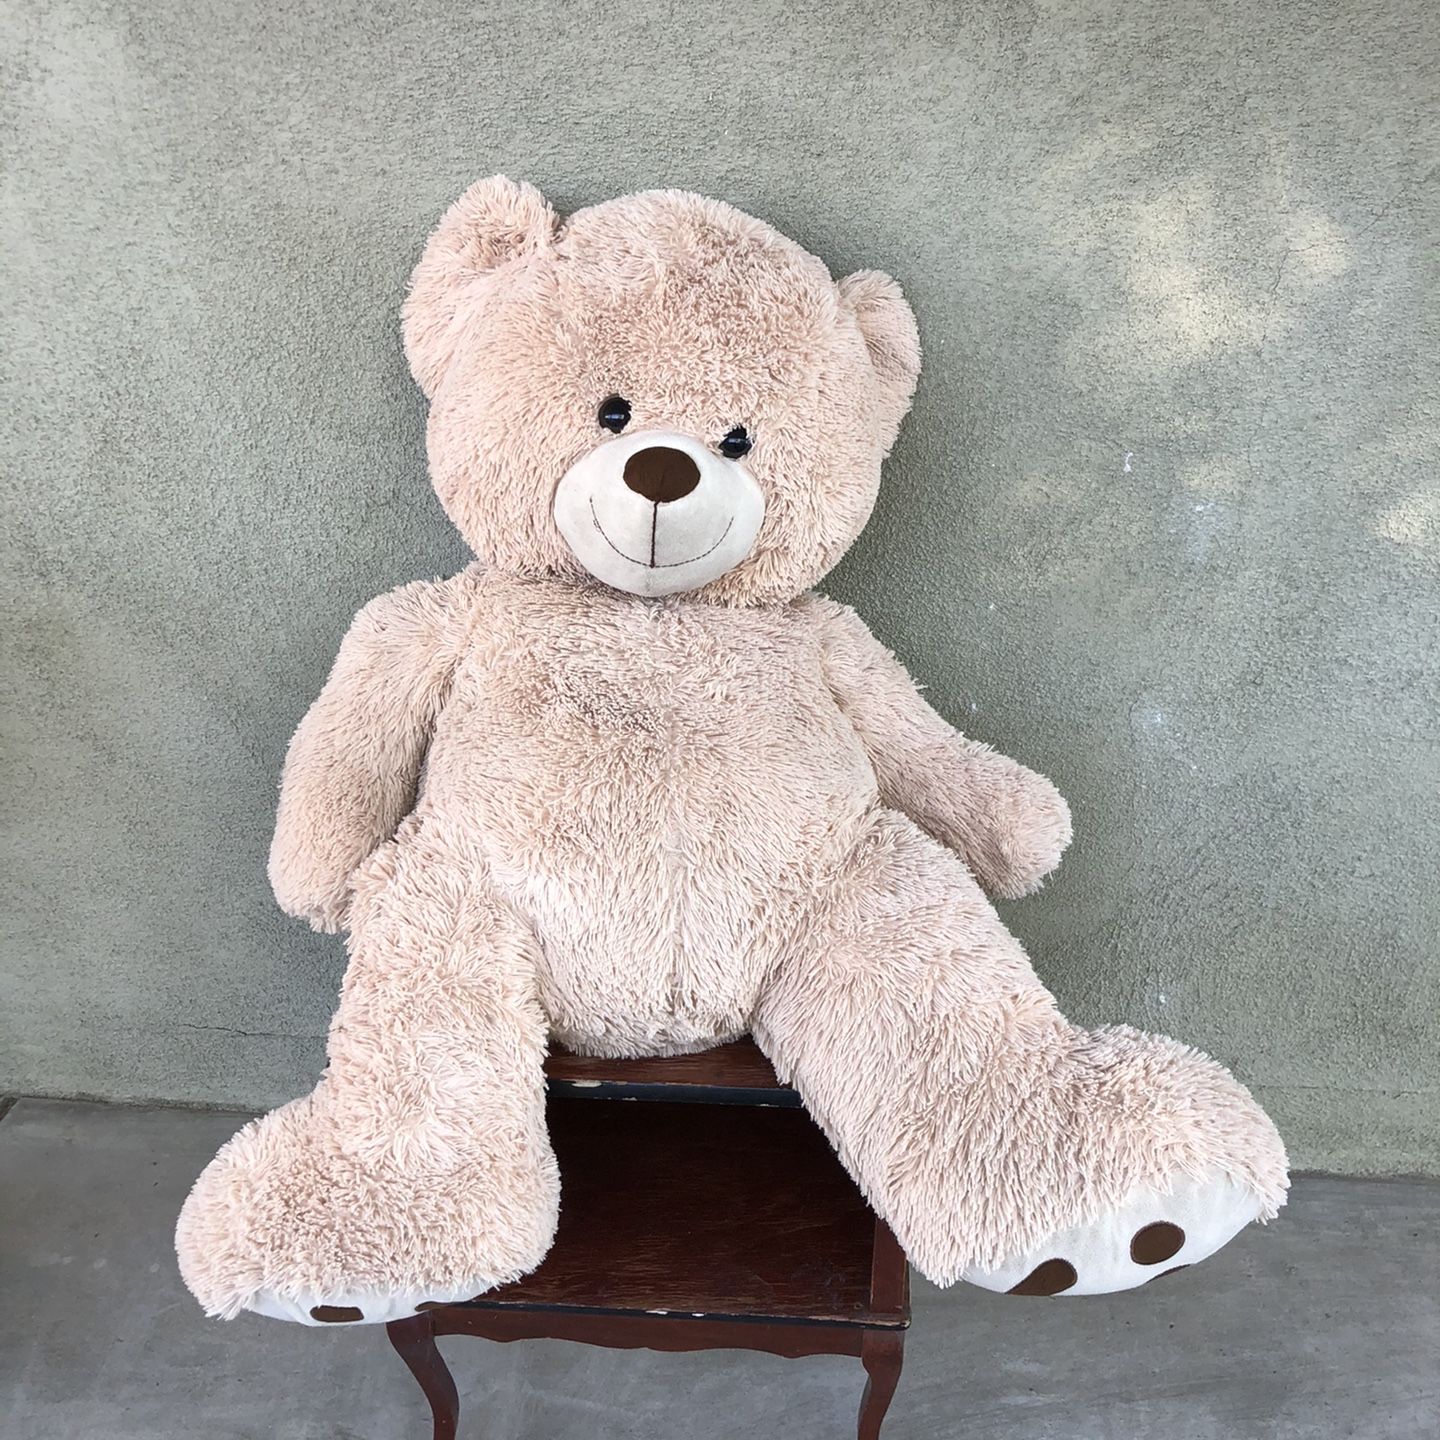 Giant Teddy Bear Stuffed Animal Plush